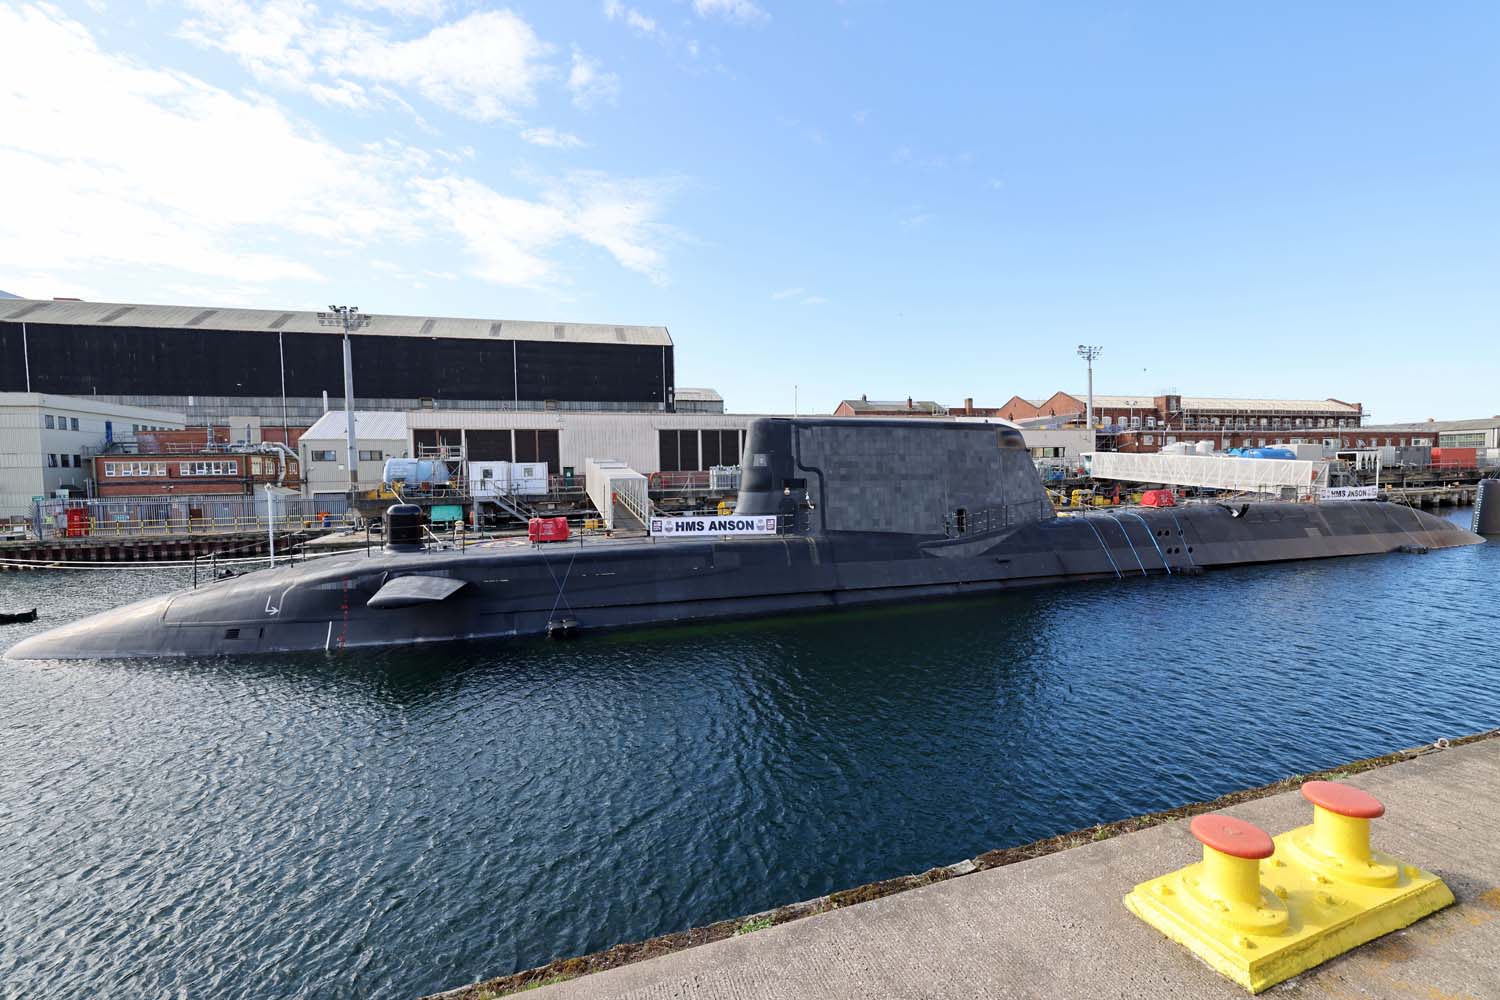 New attack submarine HMS Anson joins the Royal Navy fleet